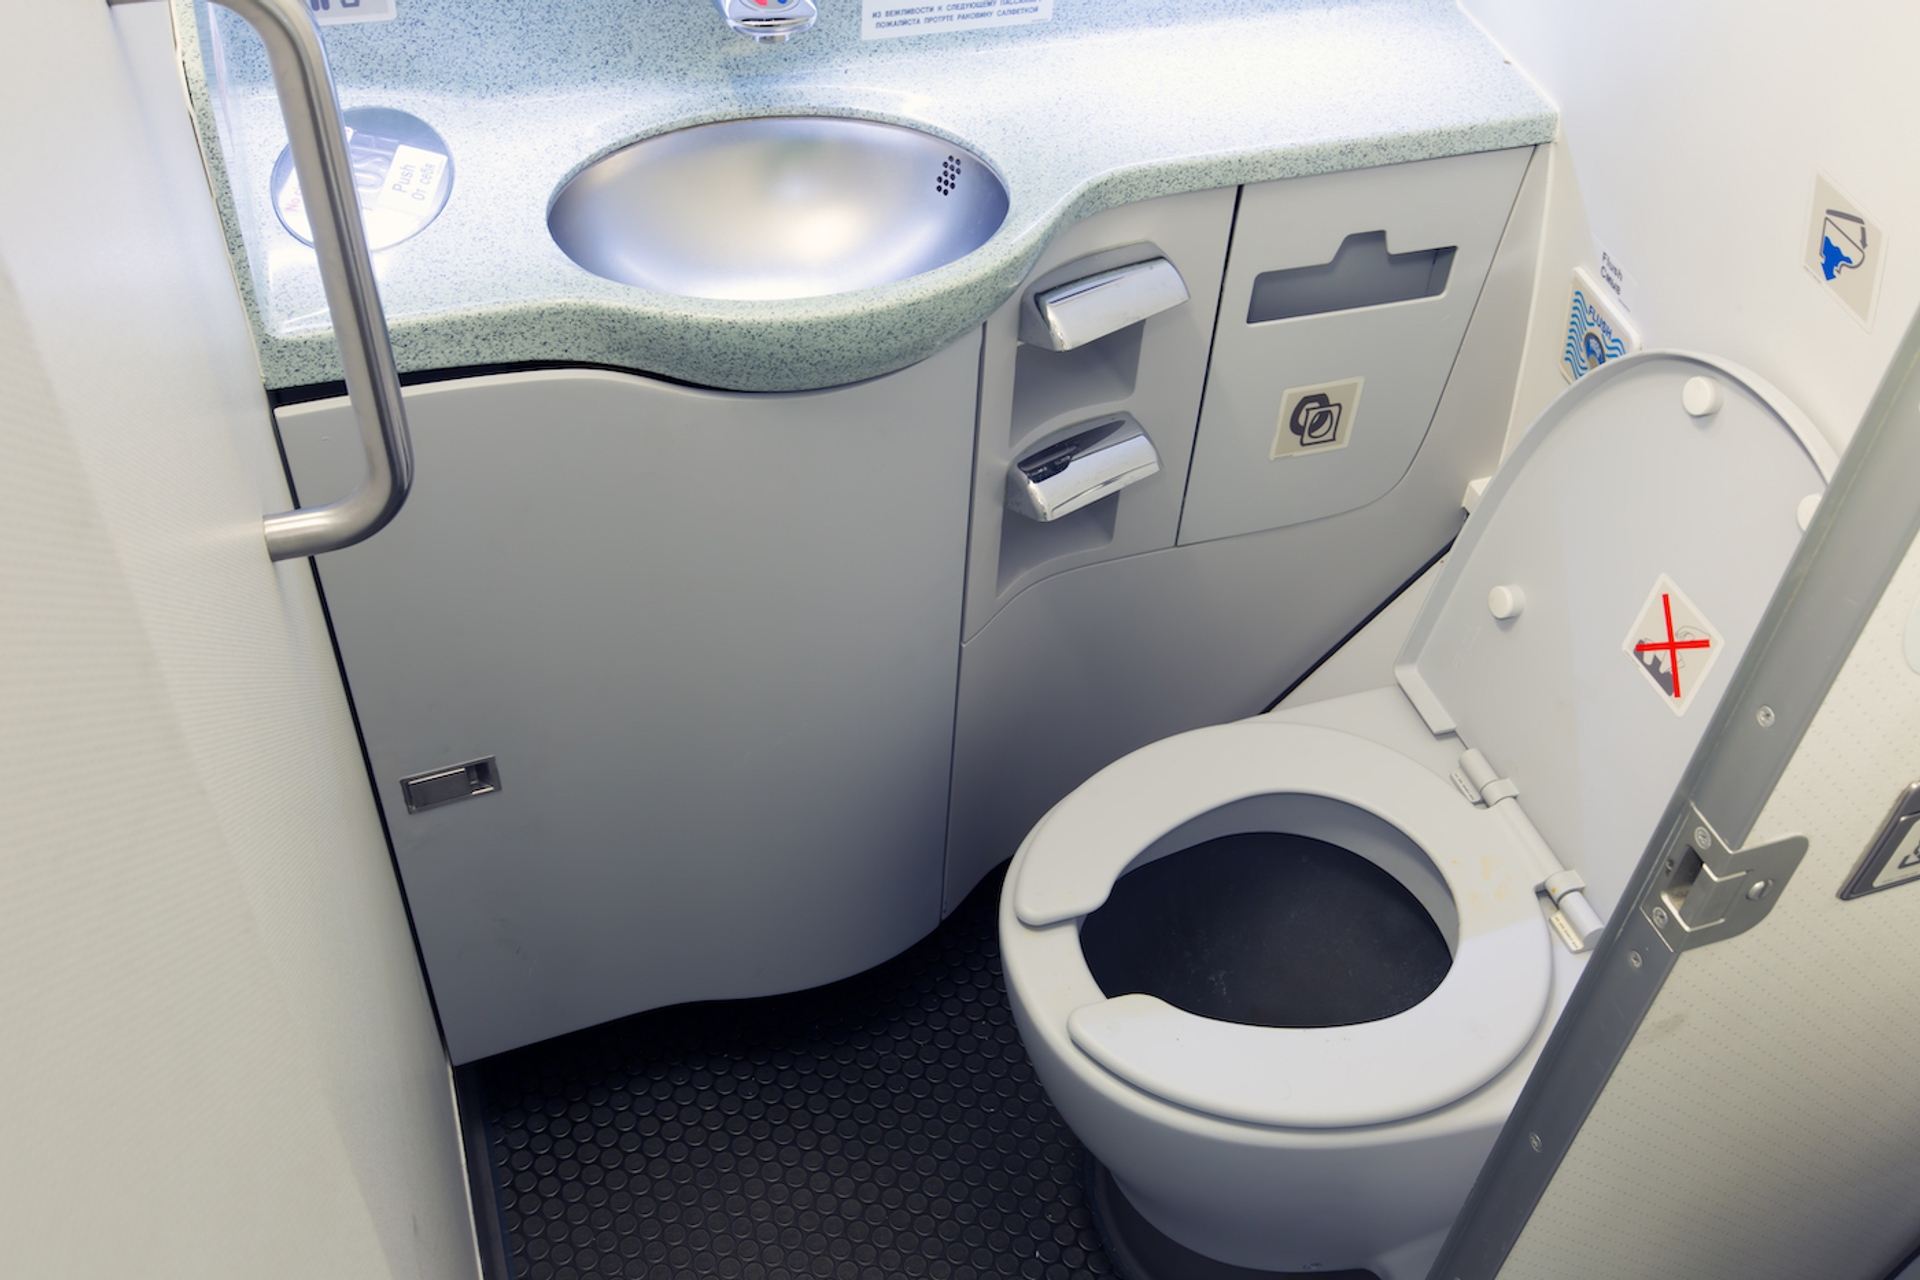 wc vliegtuig toiletafval